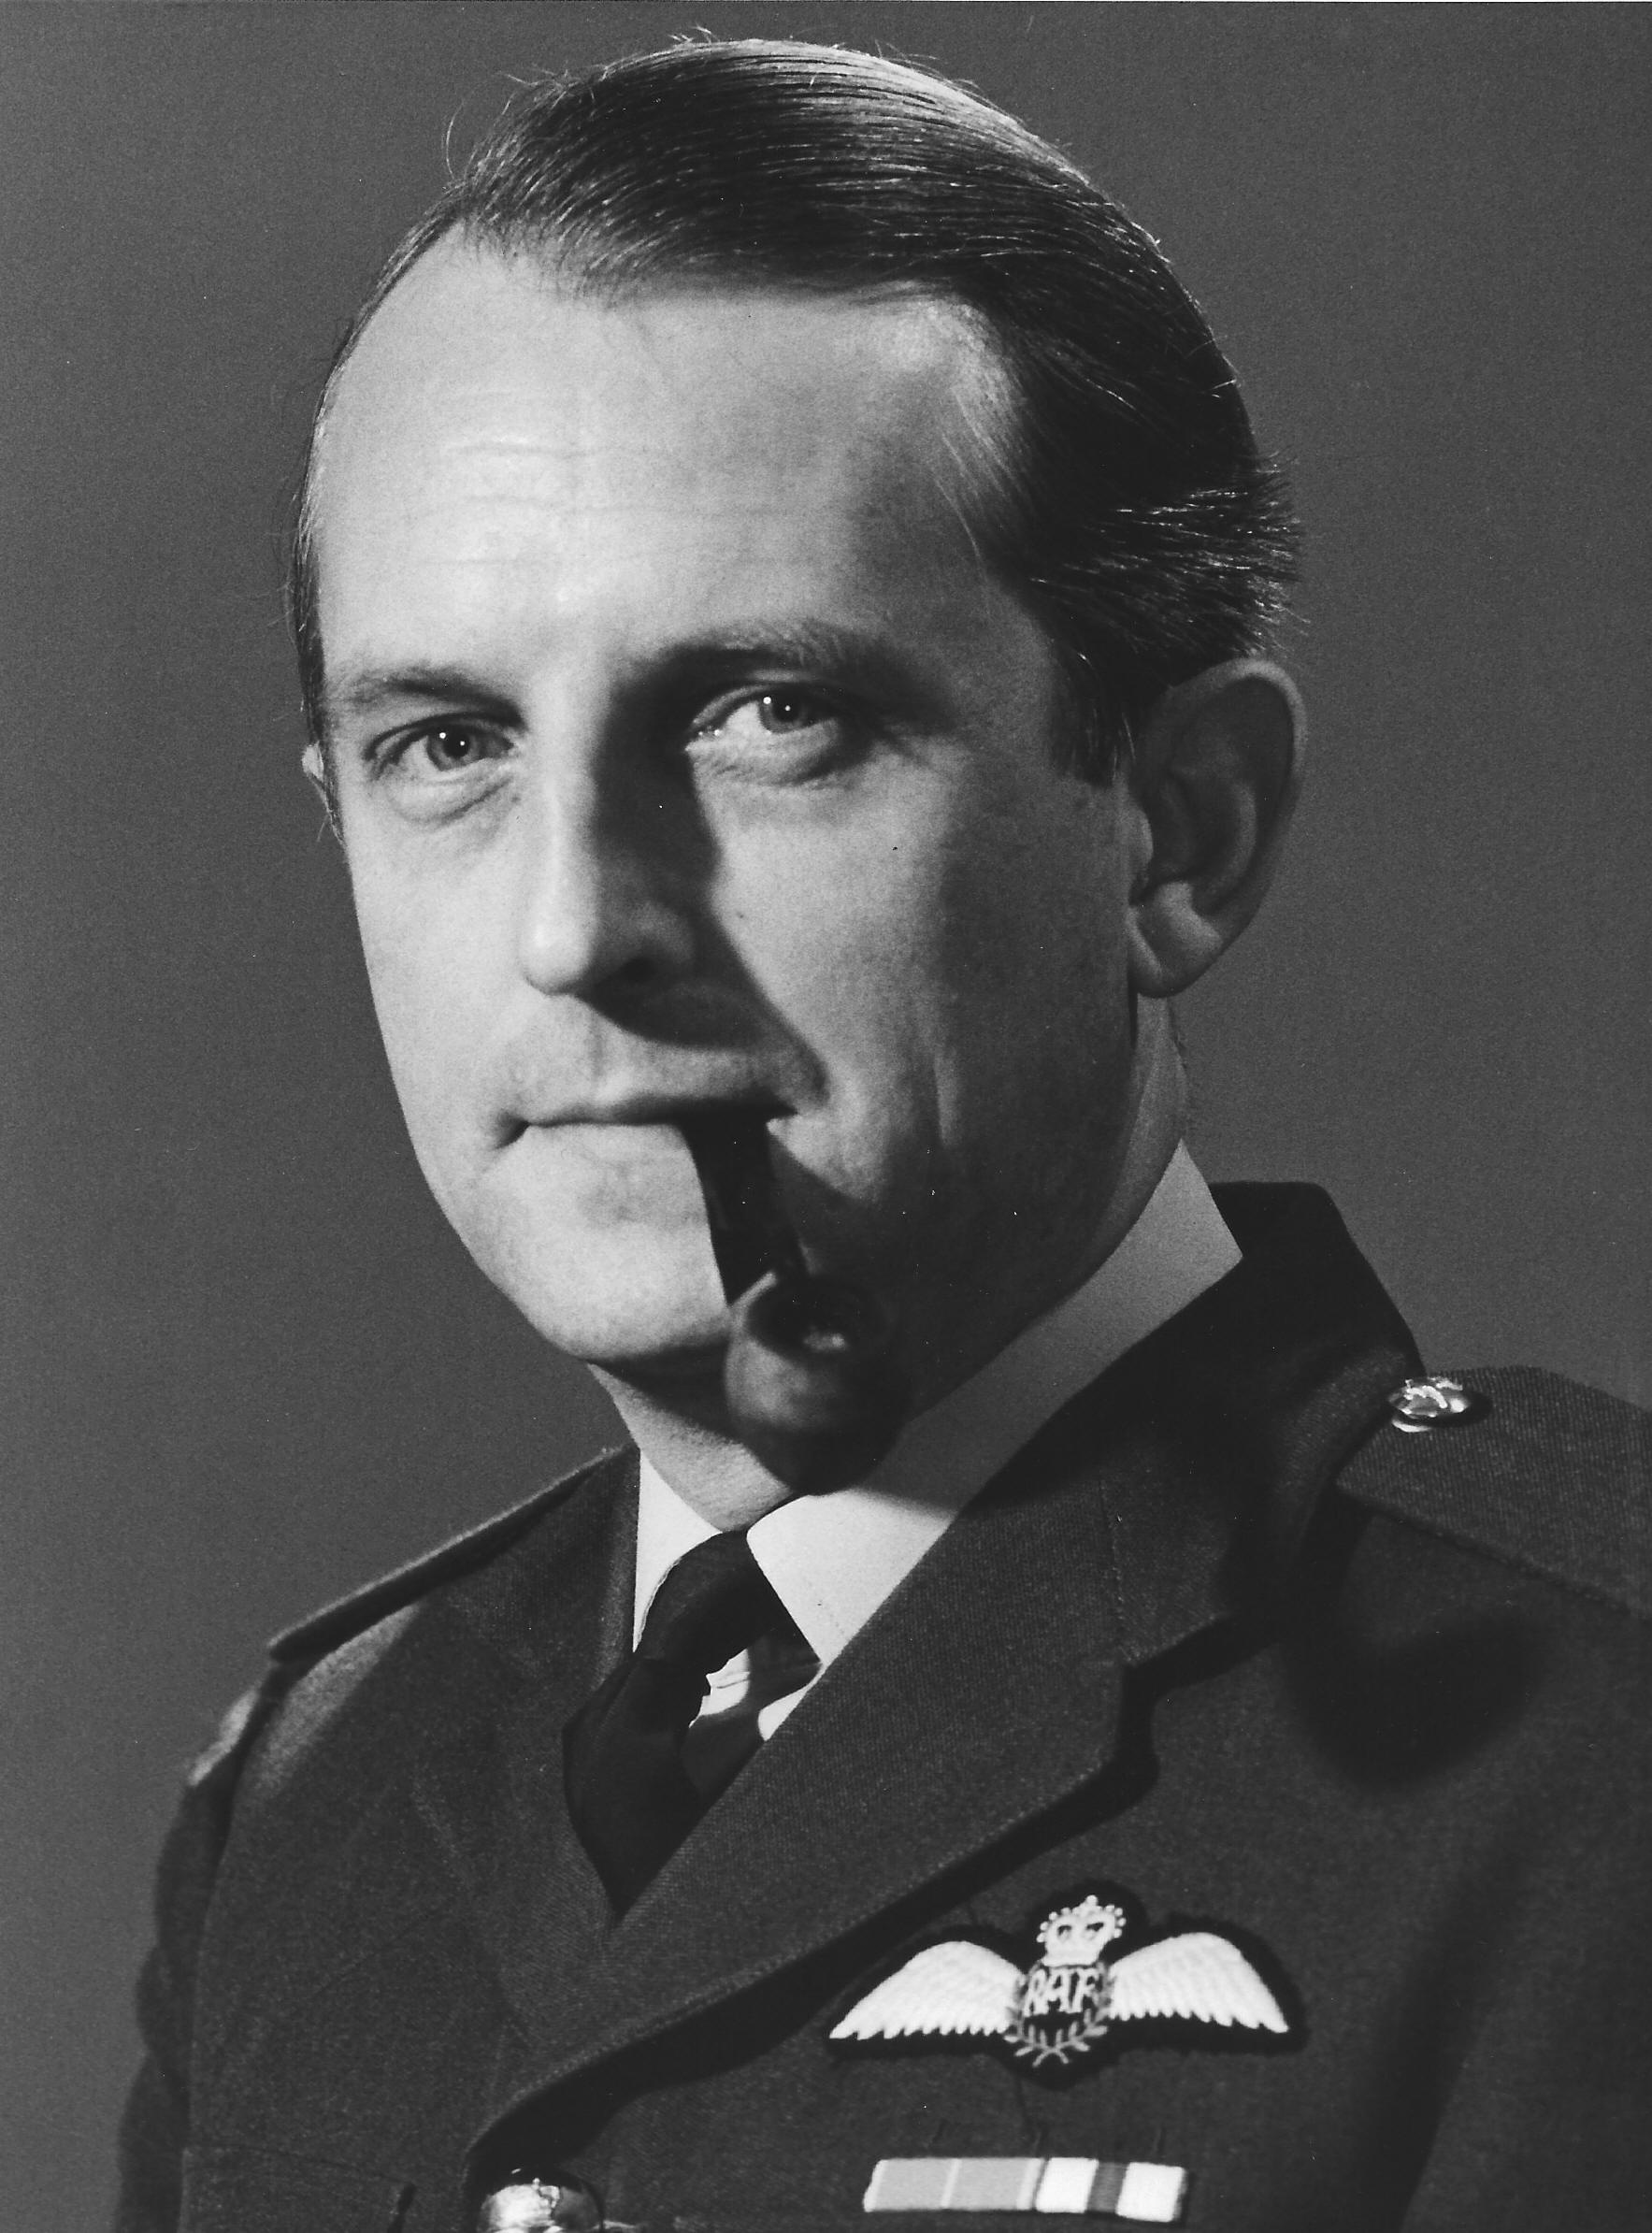 Air Chief Marshal Sir David Parry-Evans